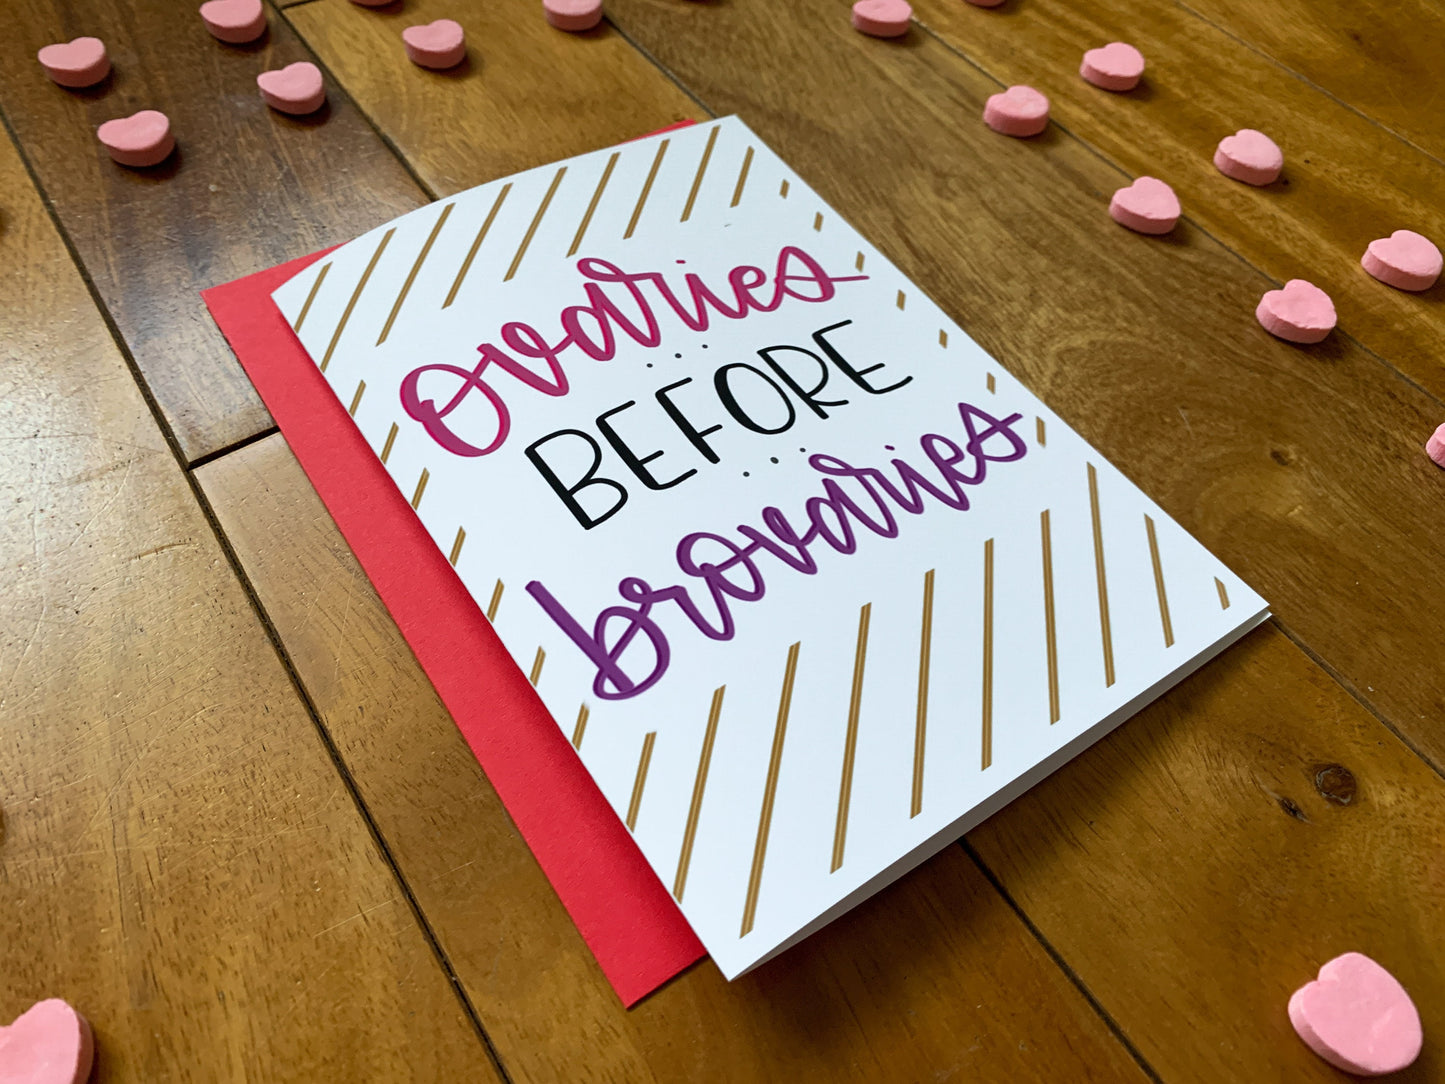 Ovaries Before Brovaries Snarky Handmade Valentine Card by StoneDonut Design